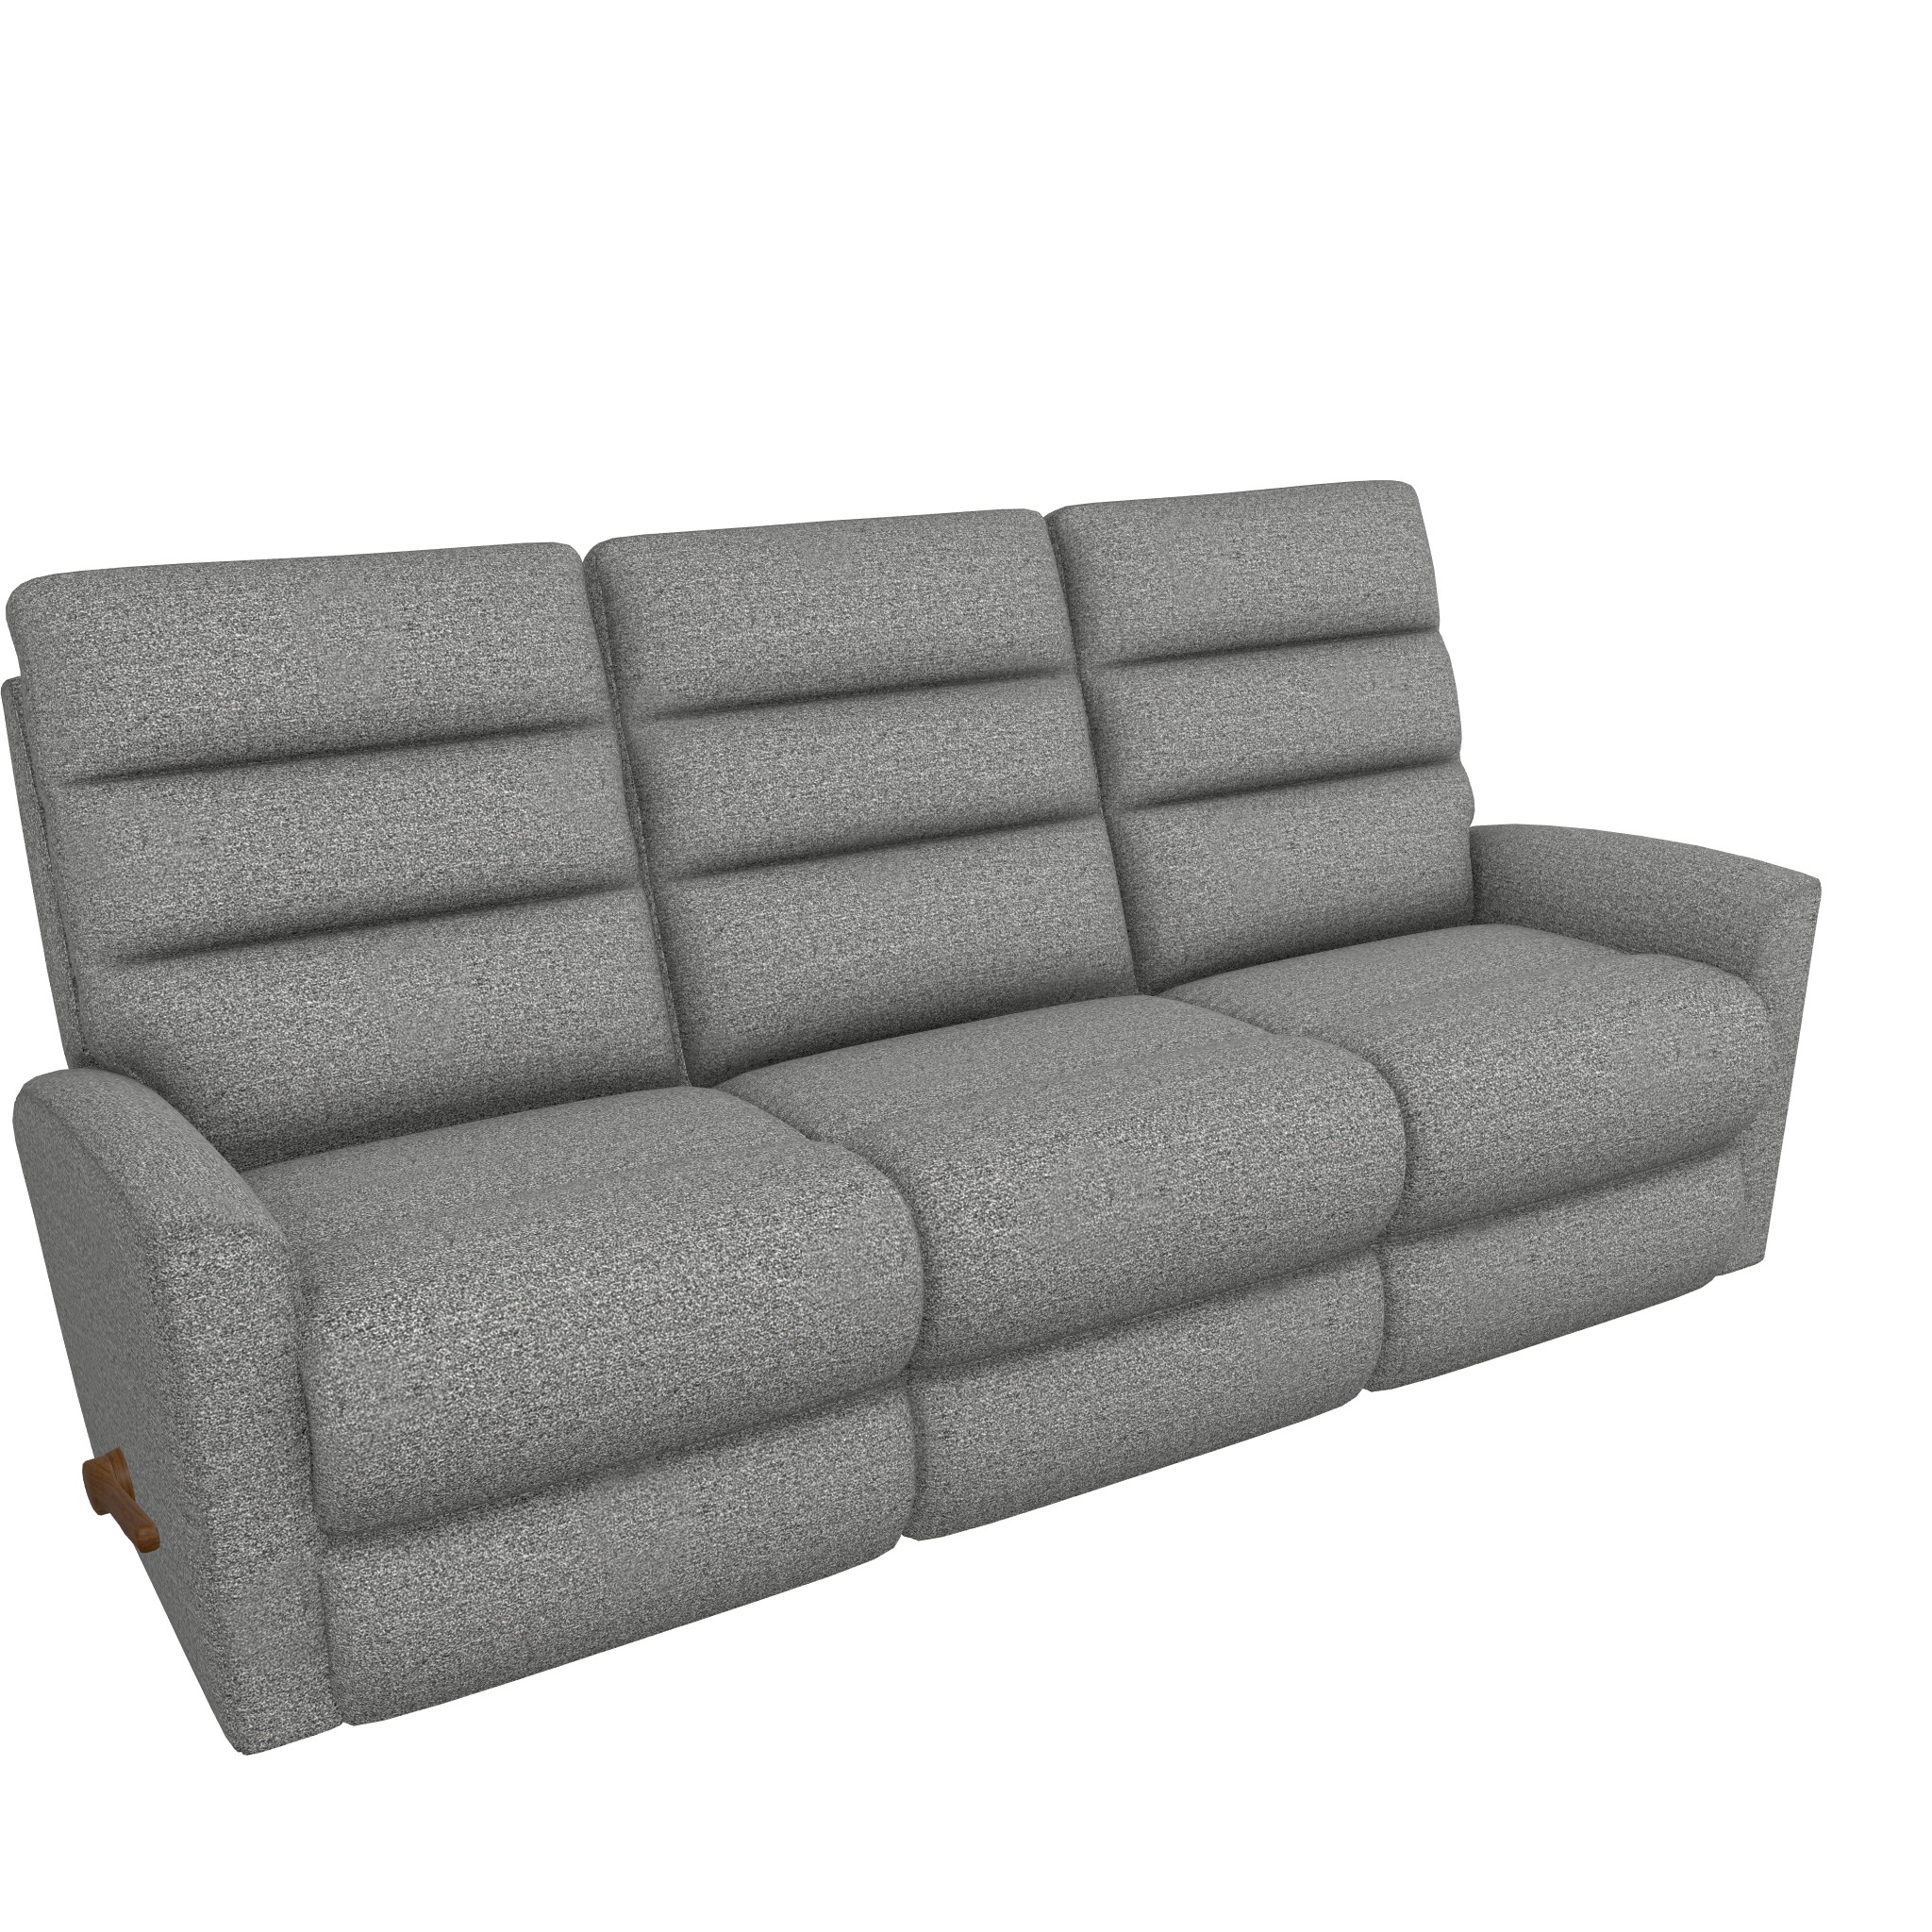 Image - 1 - Liam Fabric Full Reclining Sofa